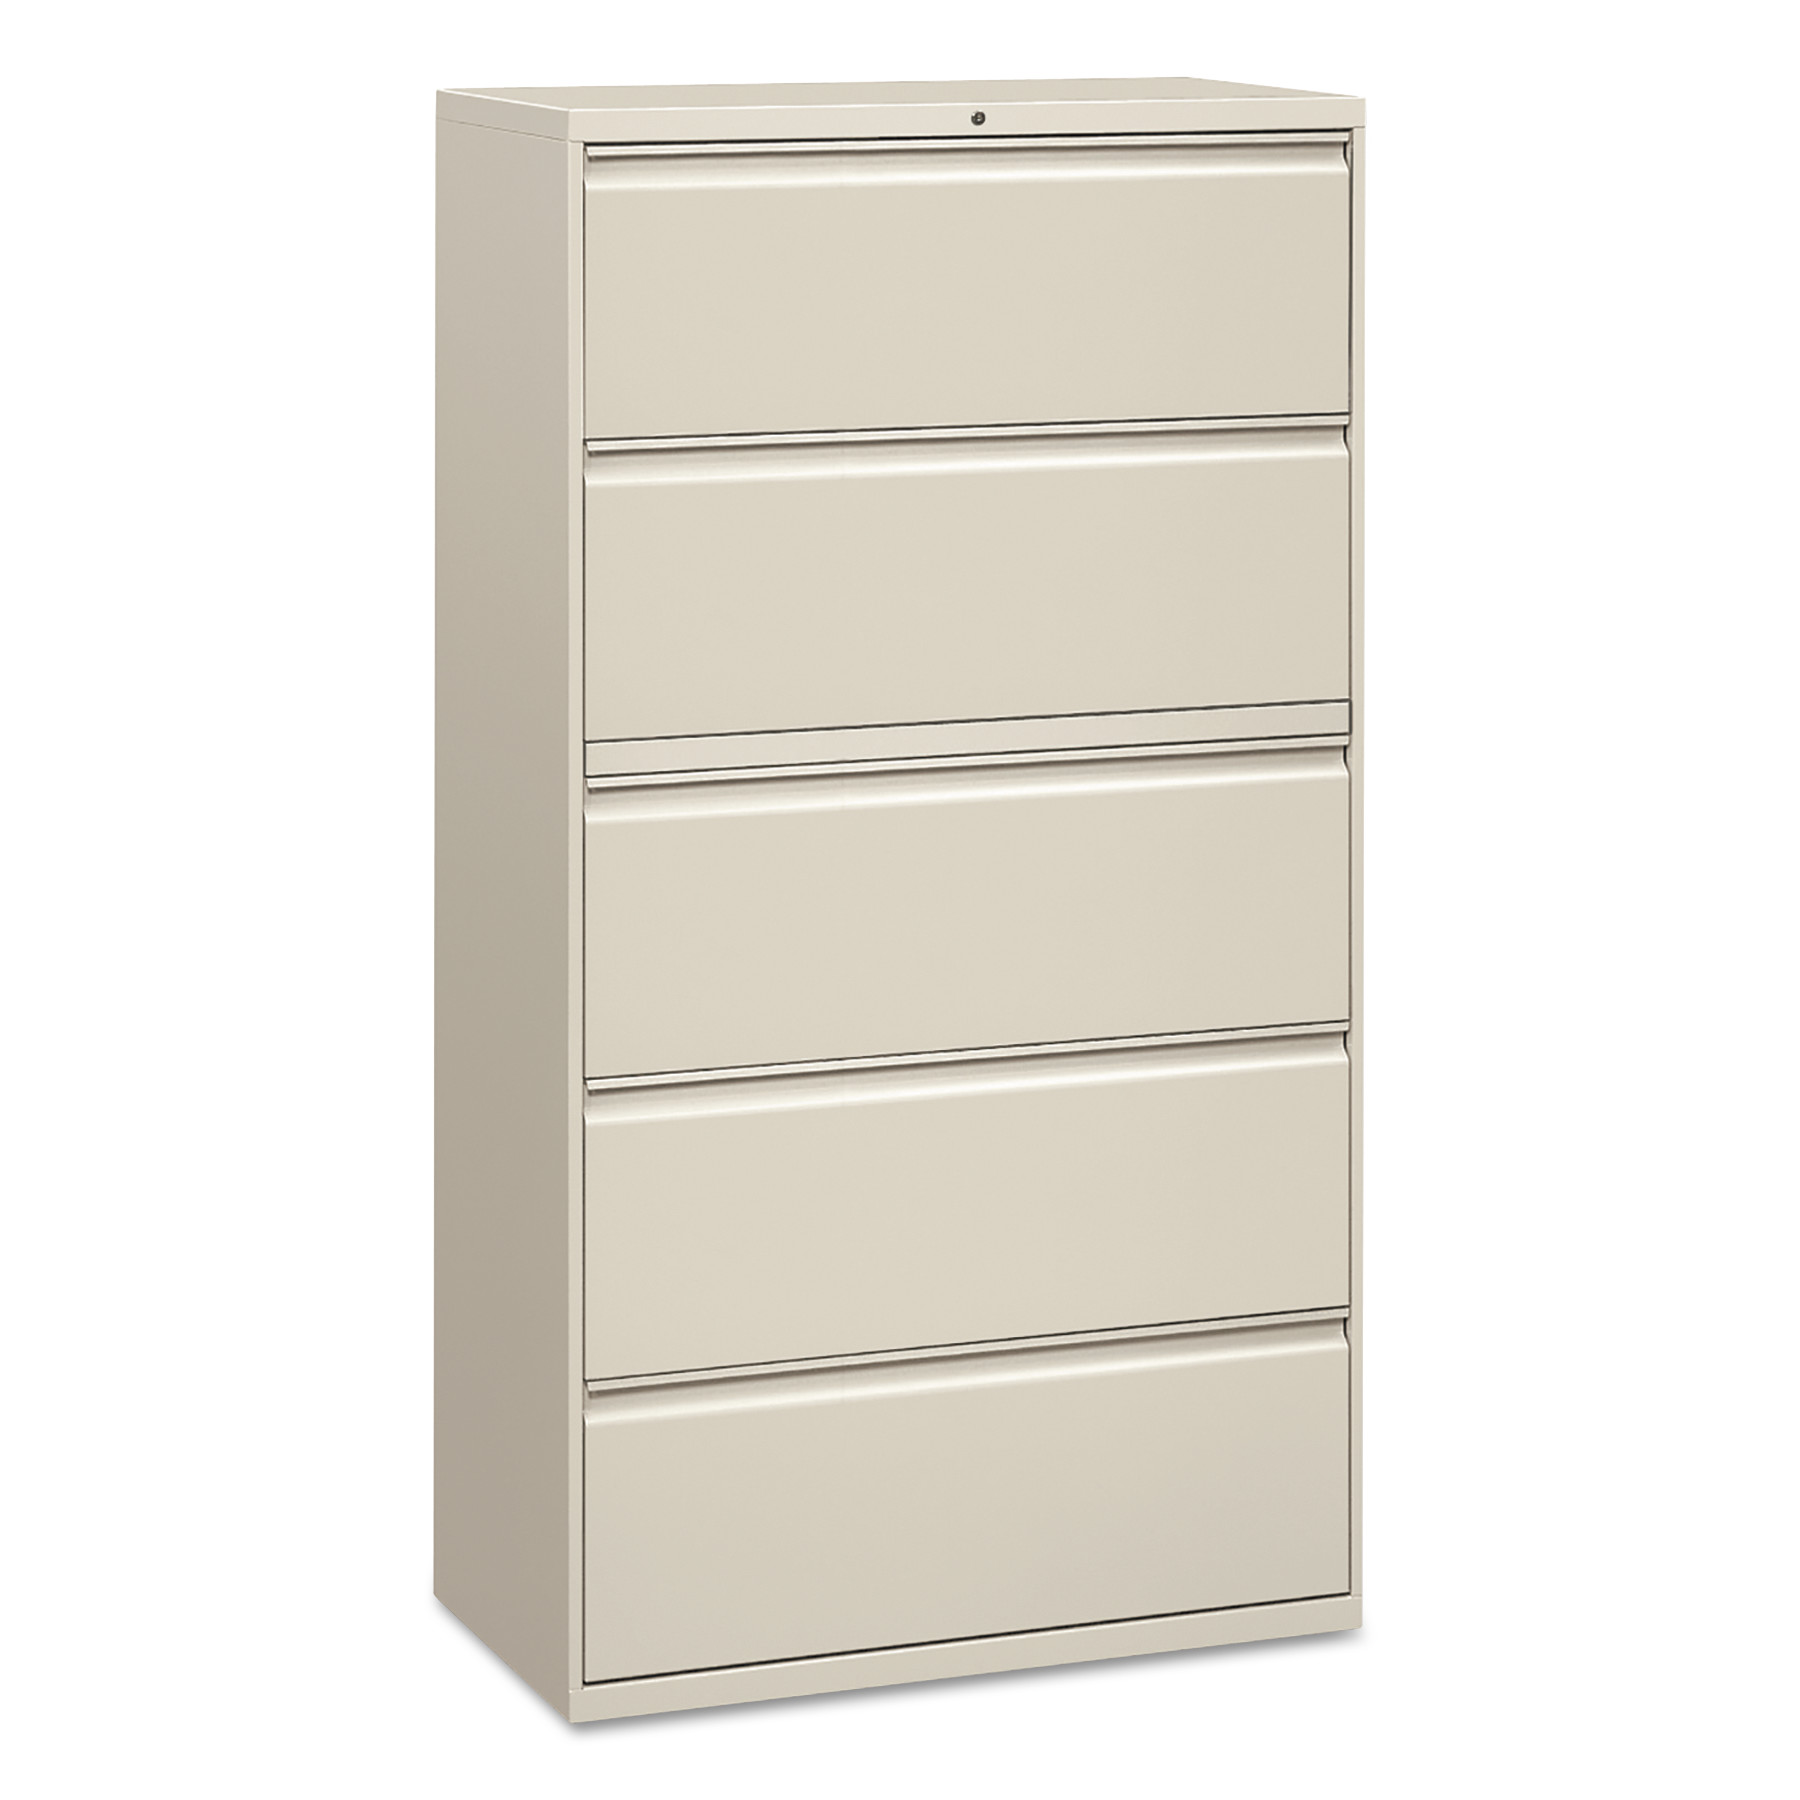  Alera ALELF3667LG Five-Drawer Lateral File Cabinet, 36w x 18d x 64.25h, Light Gray (ALELF3667LG) 